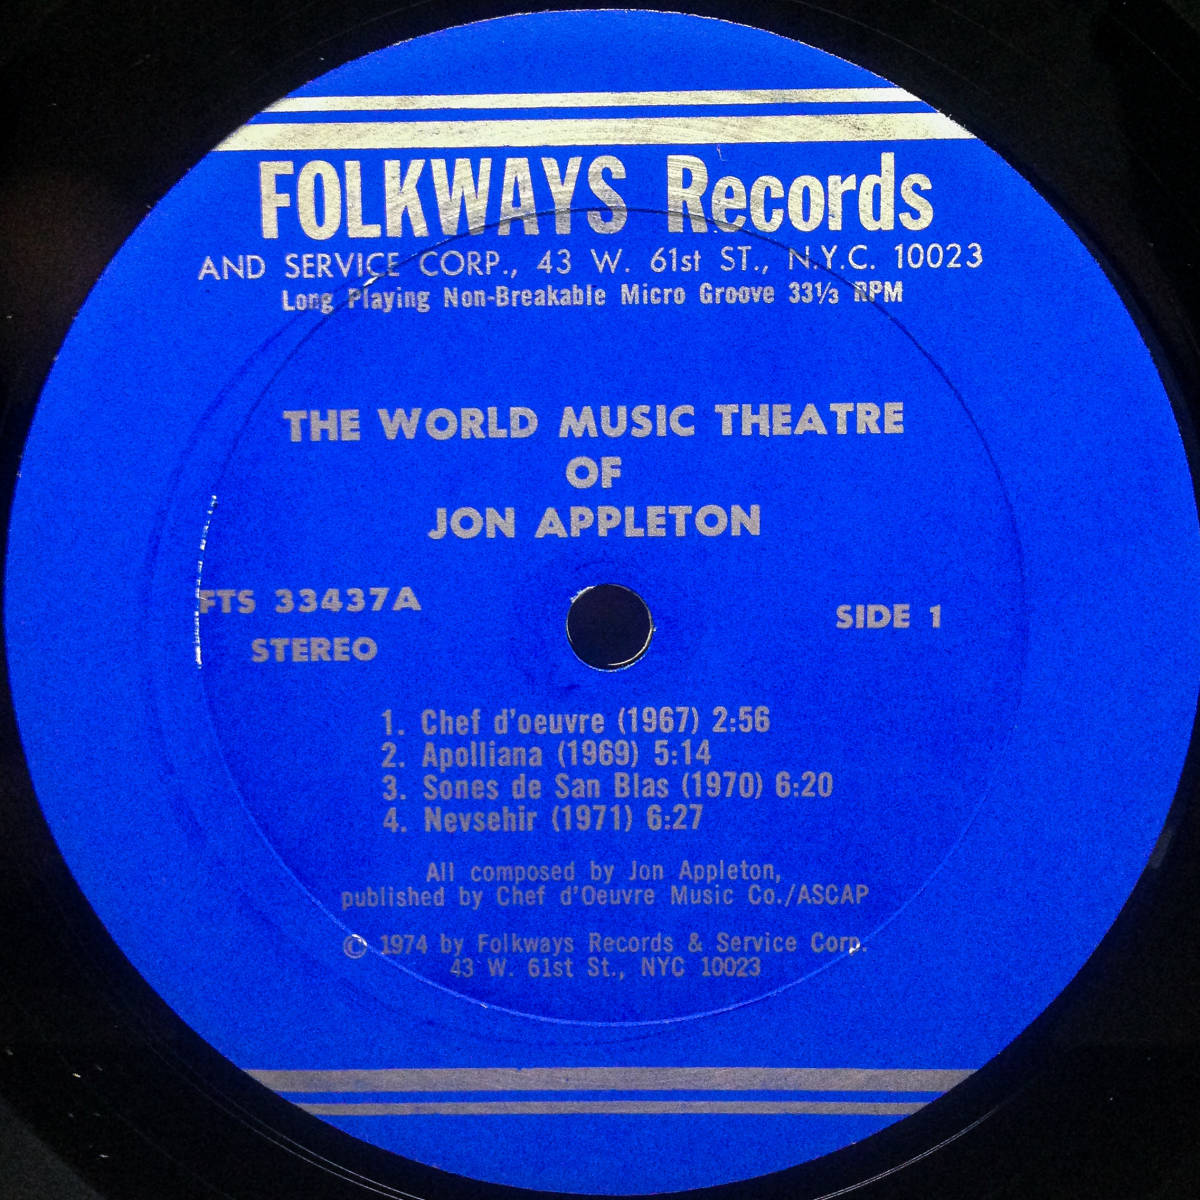 [LP] \'74 рис Orig / Jon Appleton / The World Music Theatre Of Jon Appleton / Folkways Records / FTS 33437 / Musique Concrete